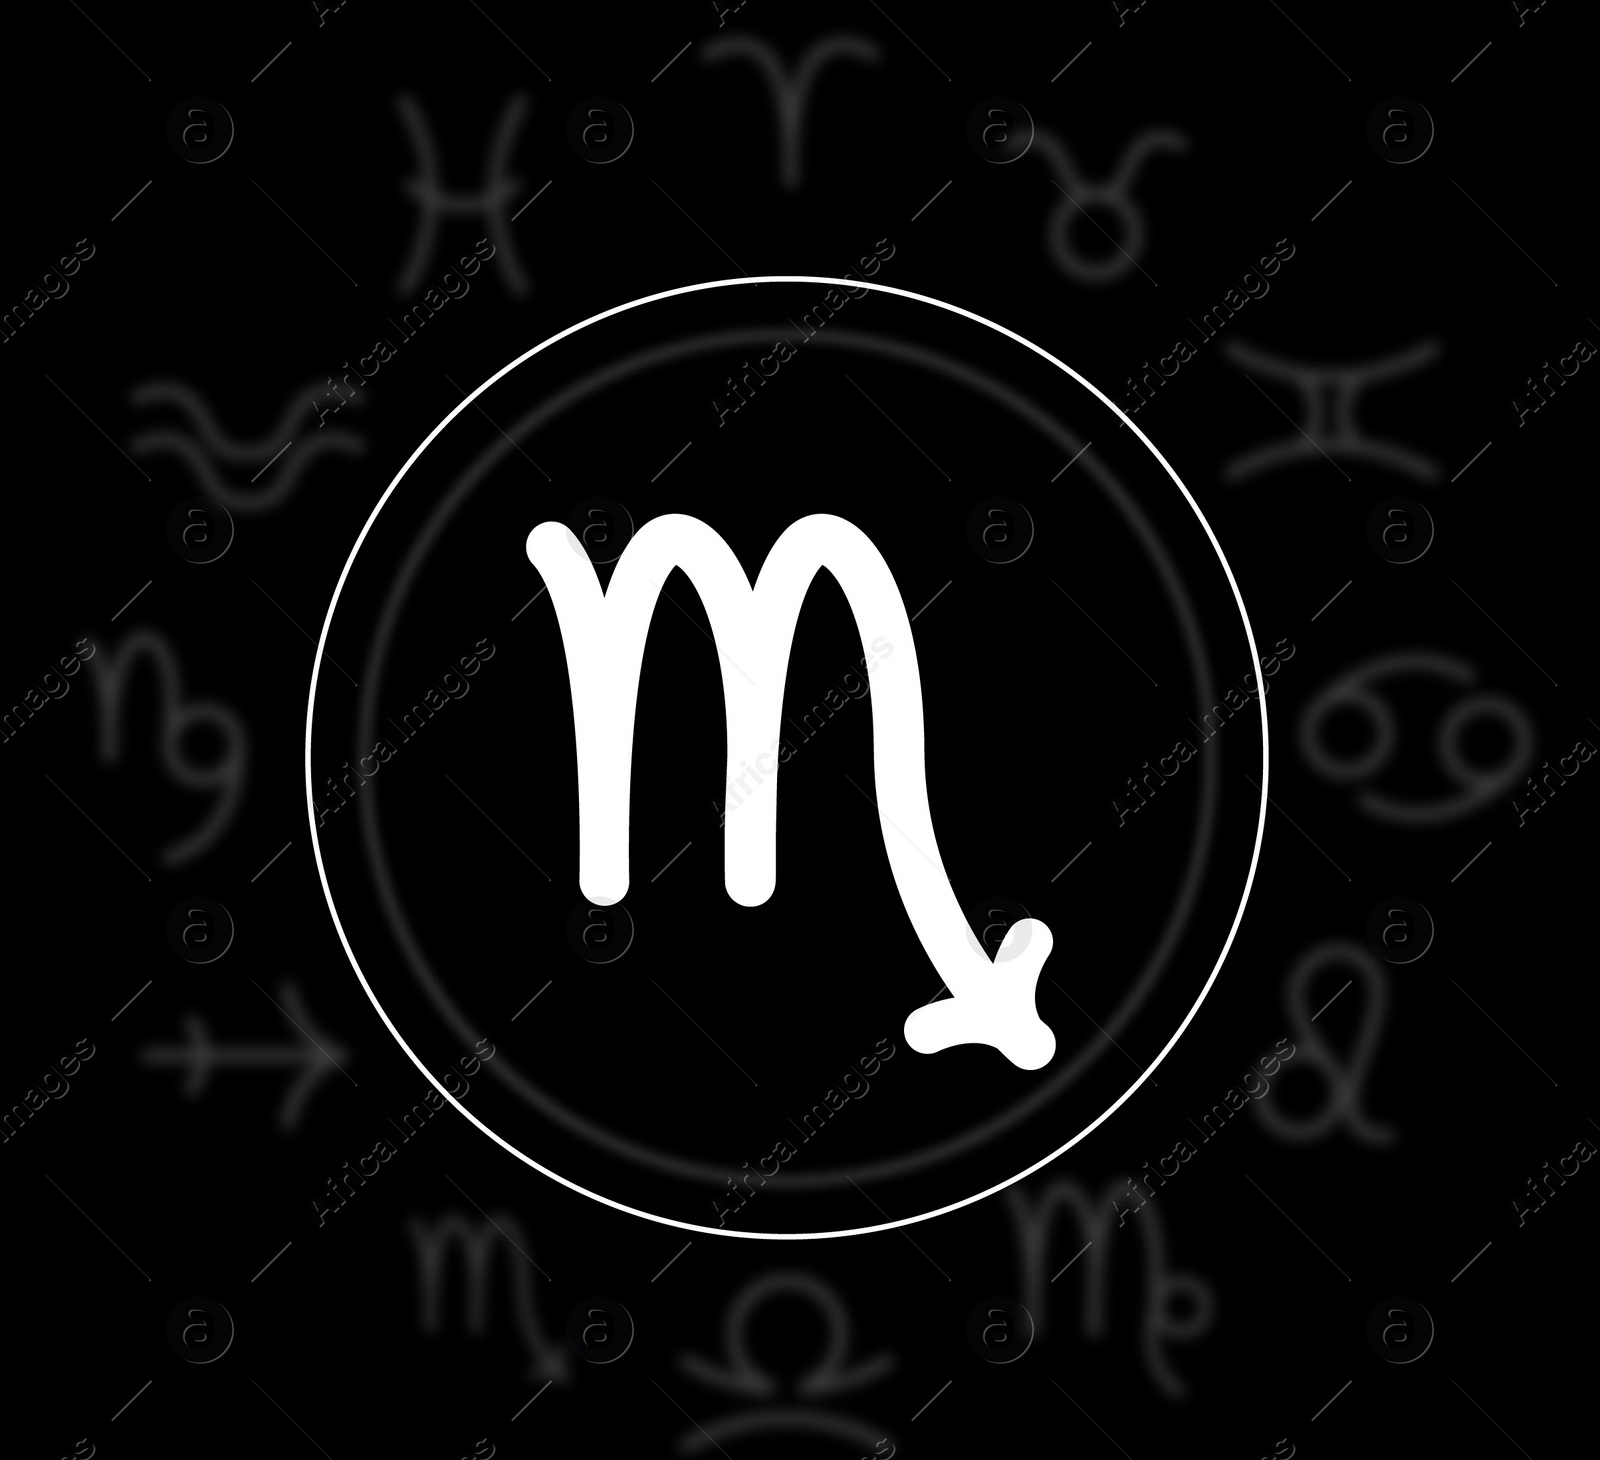 Illustration of Scorpio astrological sign and zodiac wheel on black background. Illustration 